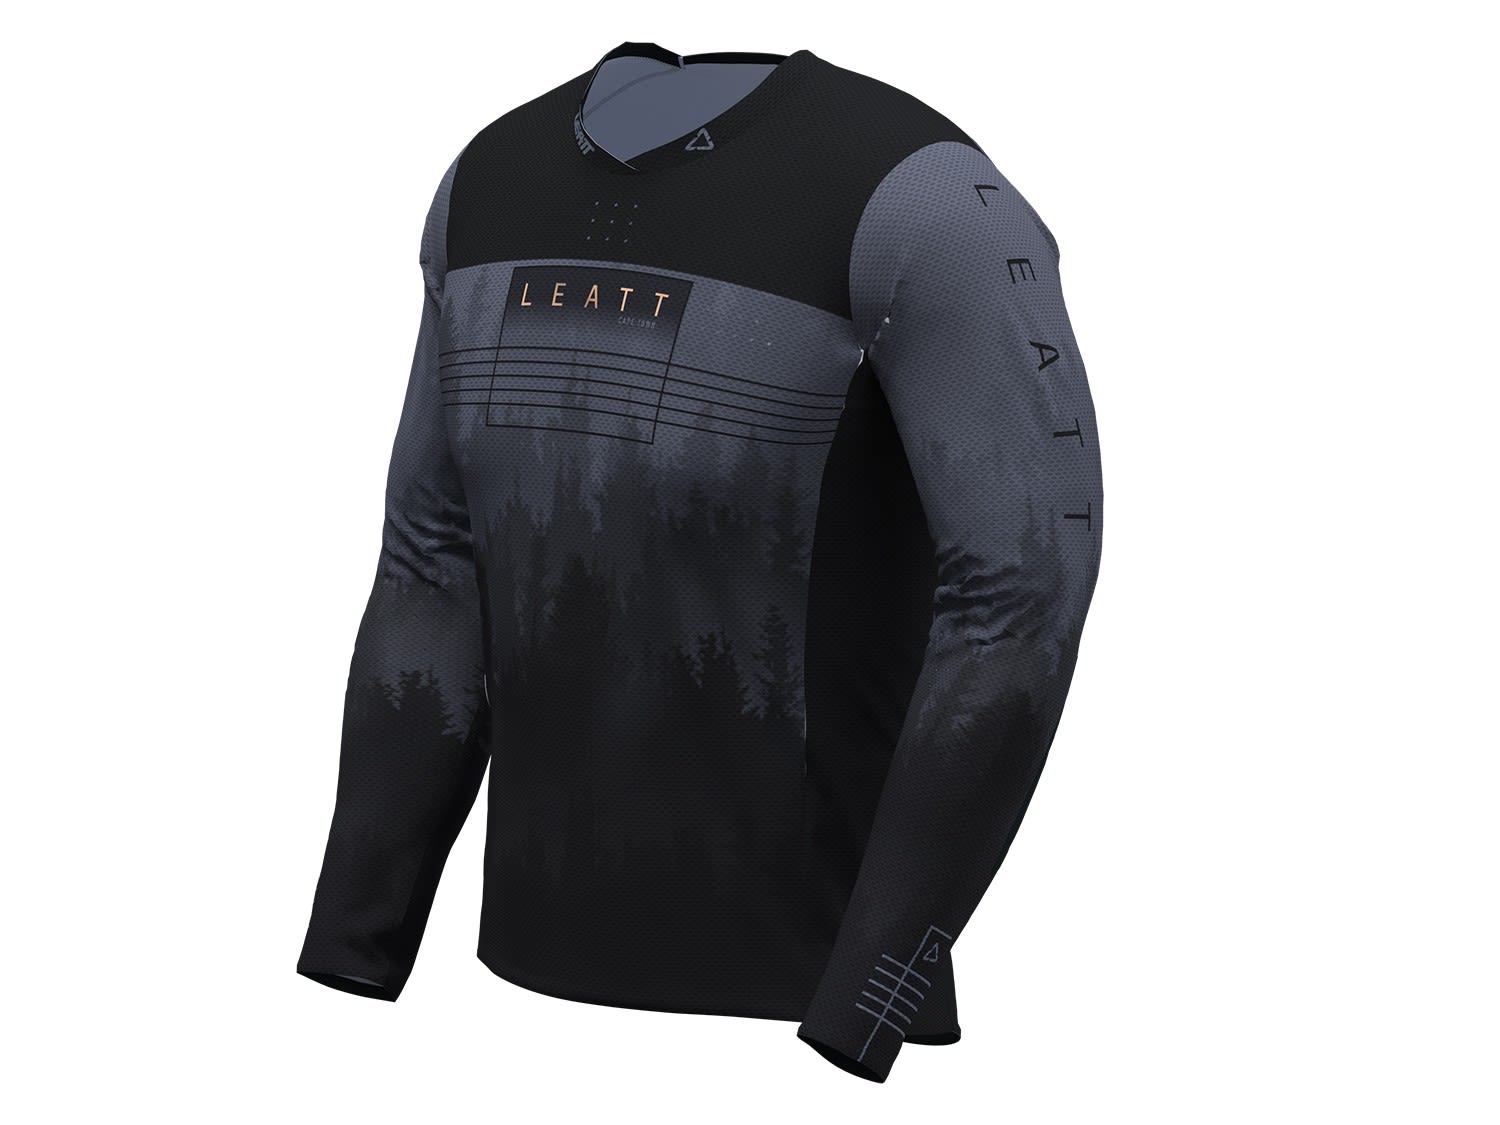 Leatt MTB Gravity 4-0 Jersey Grau - Schwarz- Male Langarm-Shirts- Grsse S - Farbe Black Print unter Leatt